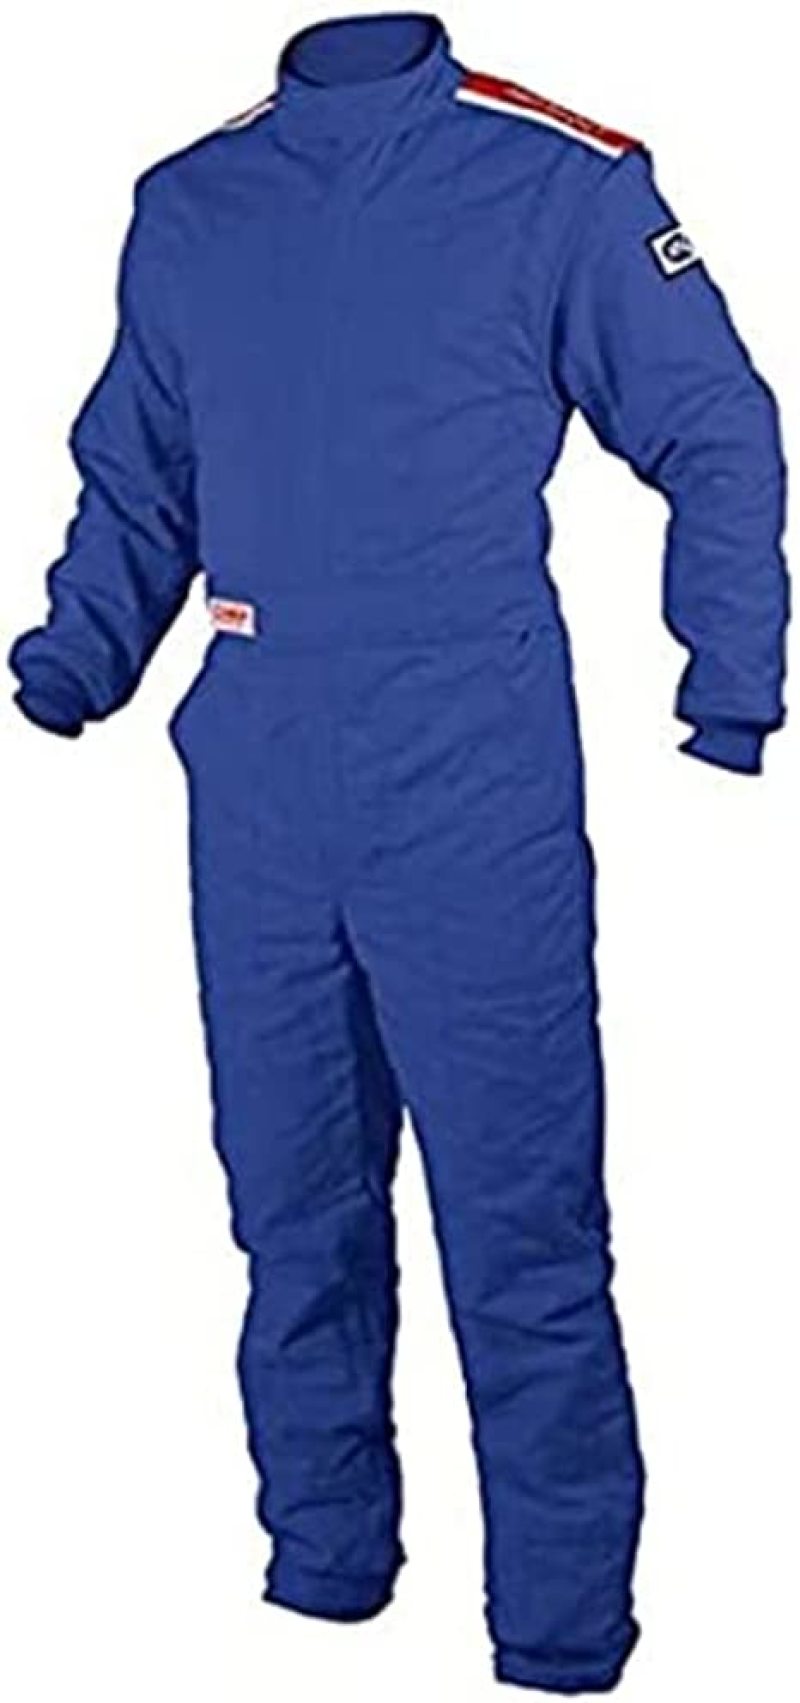 OMP Os 10 Suit - XLarge (Blue) - IA01904041XL